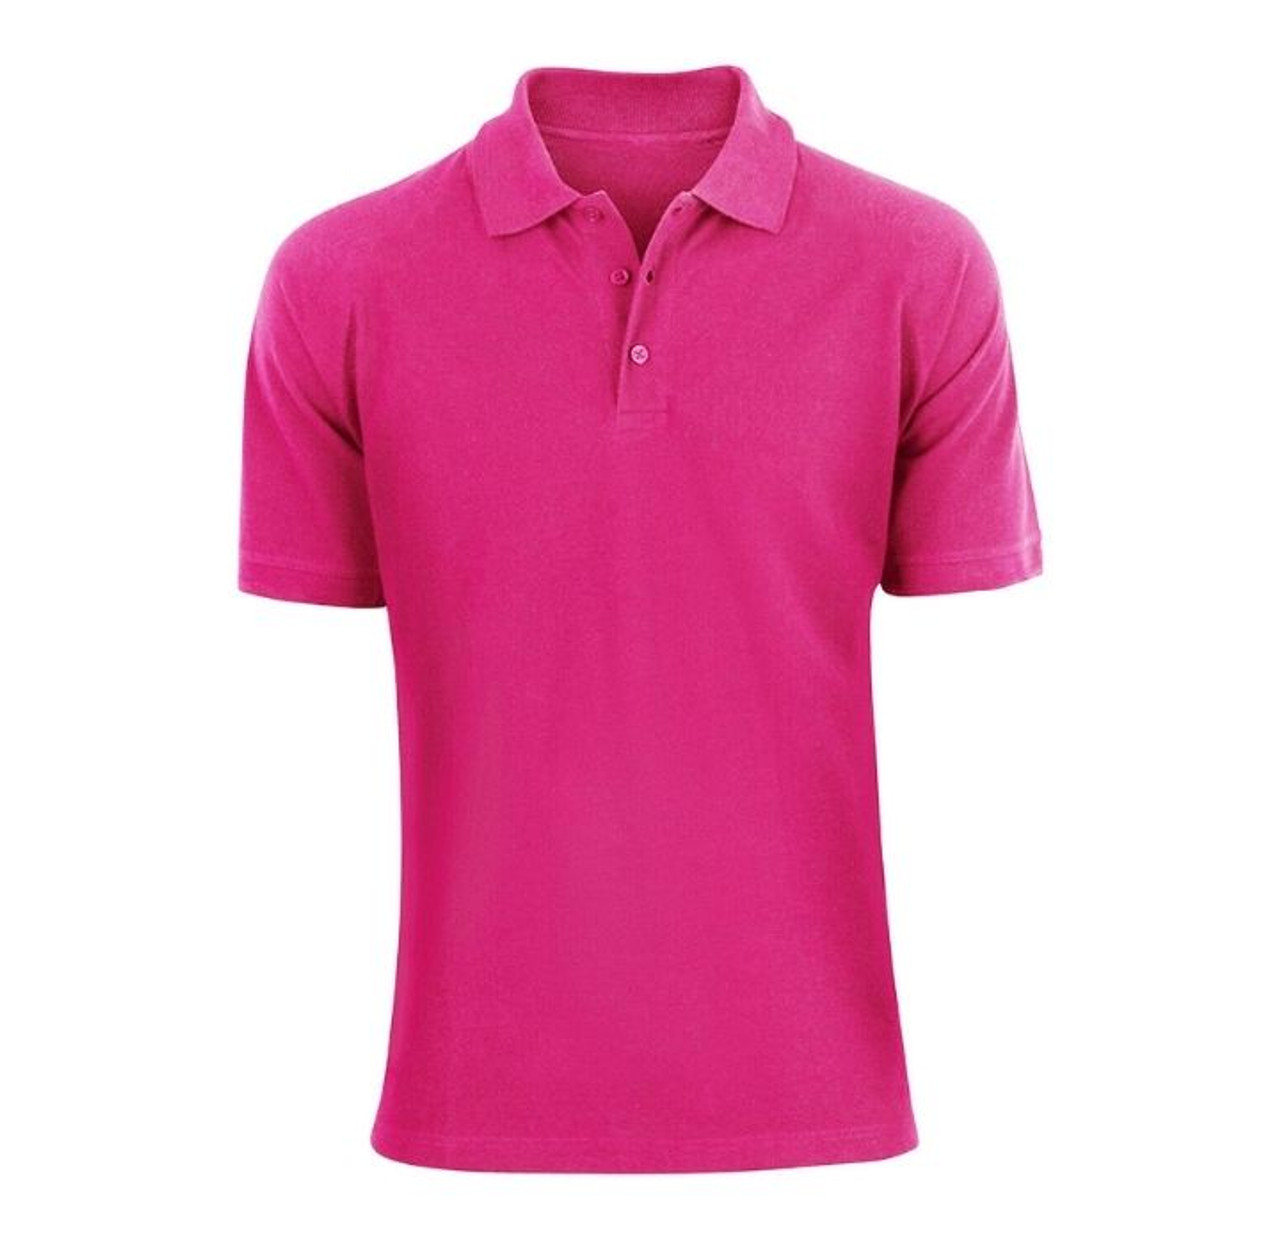 Men’s Classic-Fit Cotton Polo Shirt product image